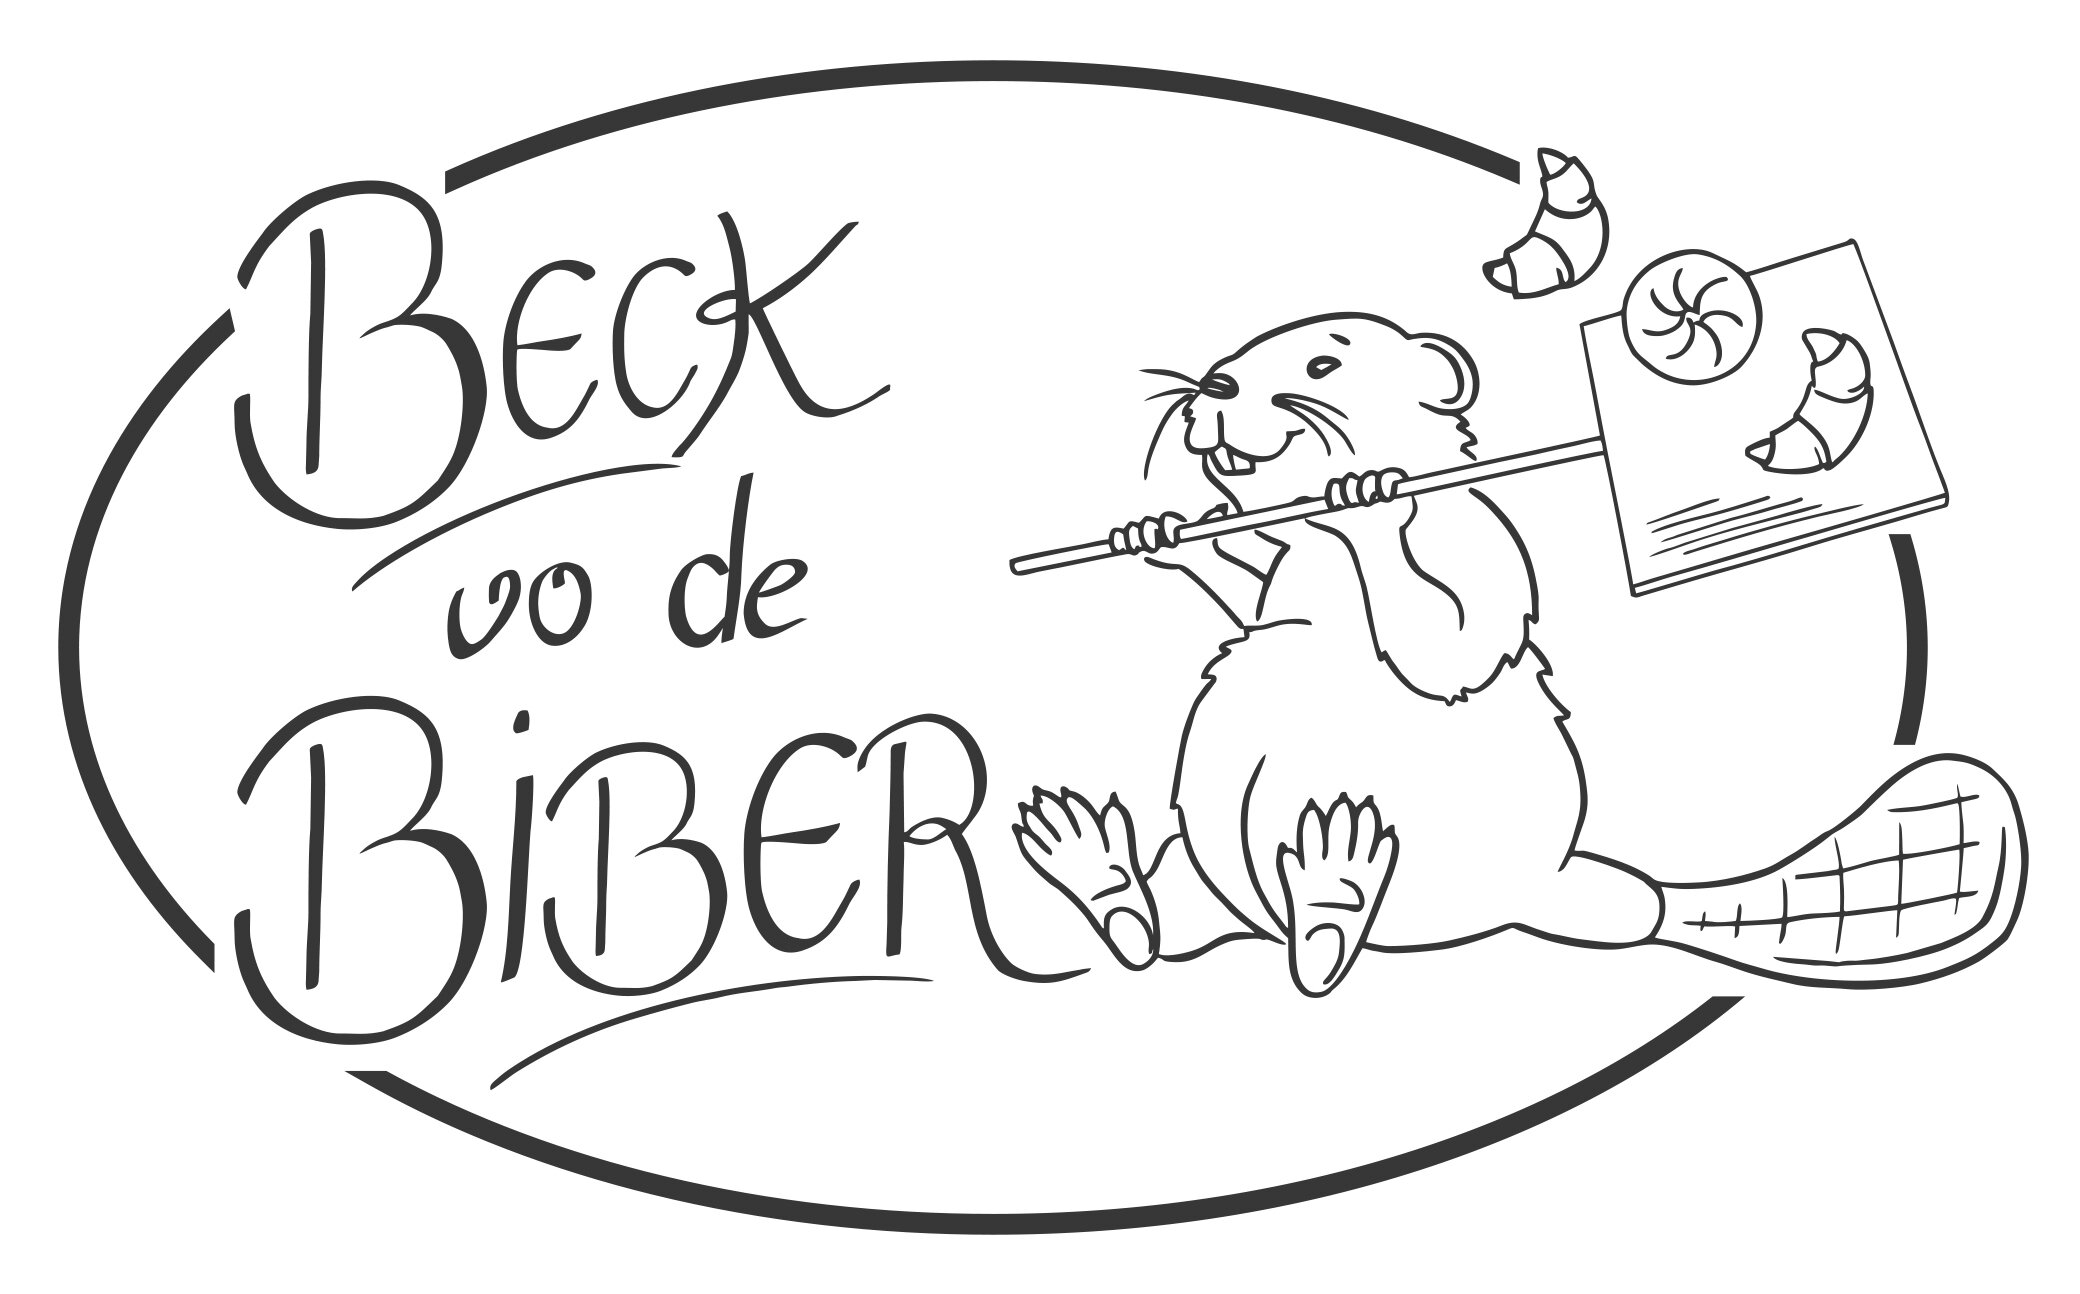 Beck vo de Biber